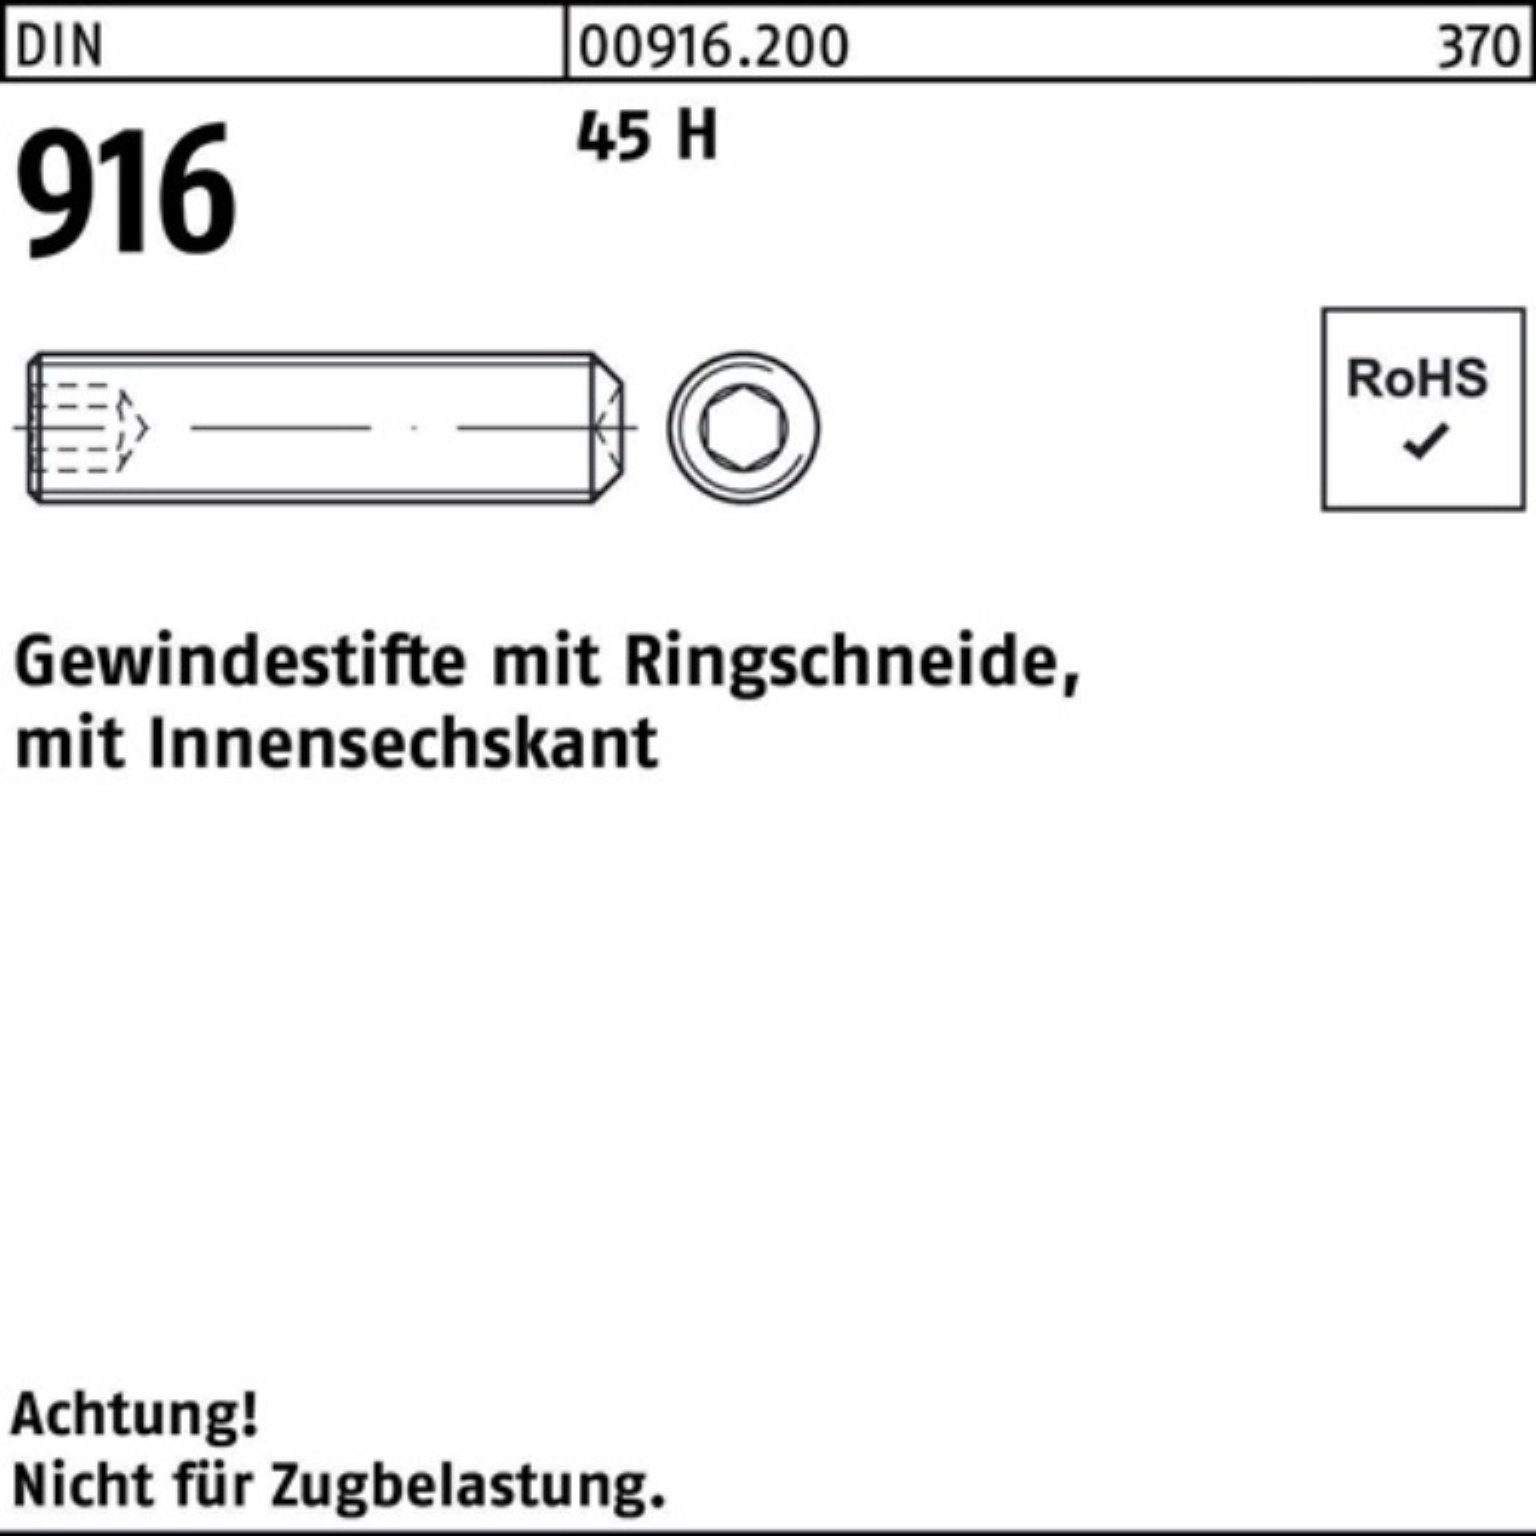 M4x Reyher St 45 Gewindestift 200 916 30 Pack DIN Ringschn./Innen-6kt H 200er Gewindebolzen